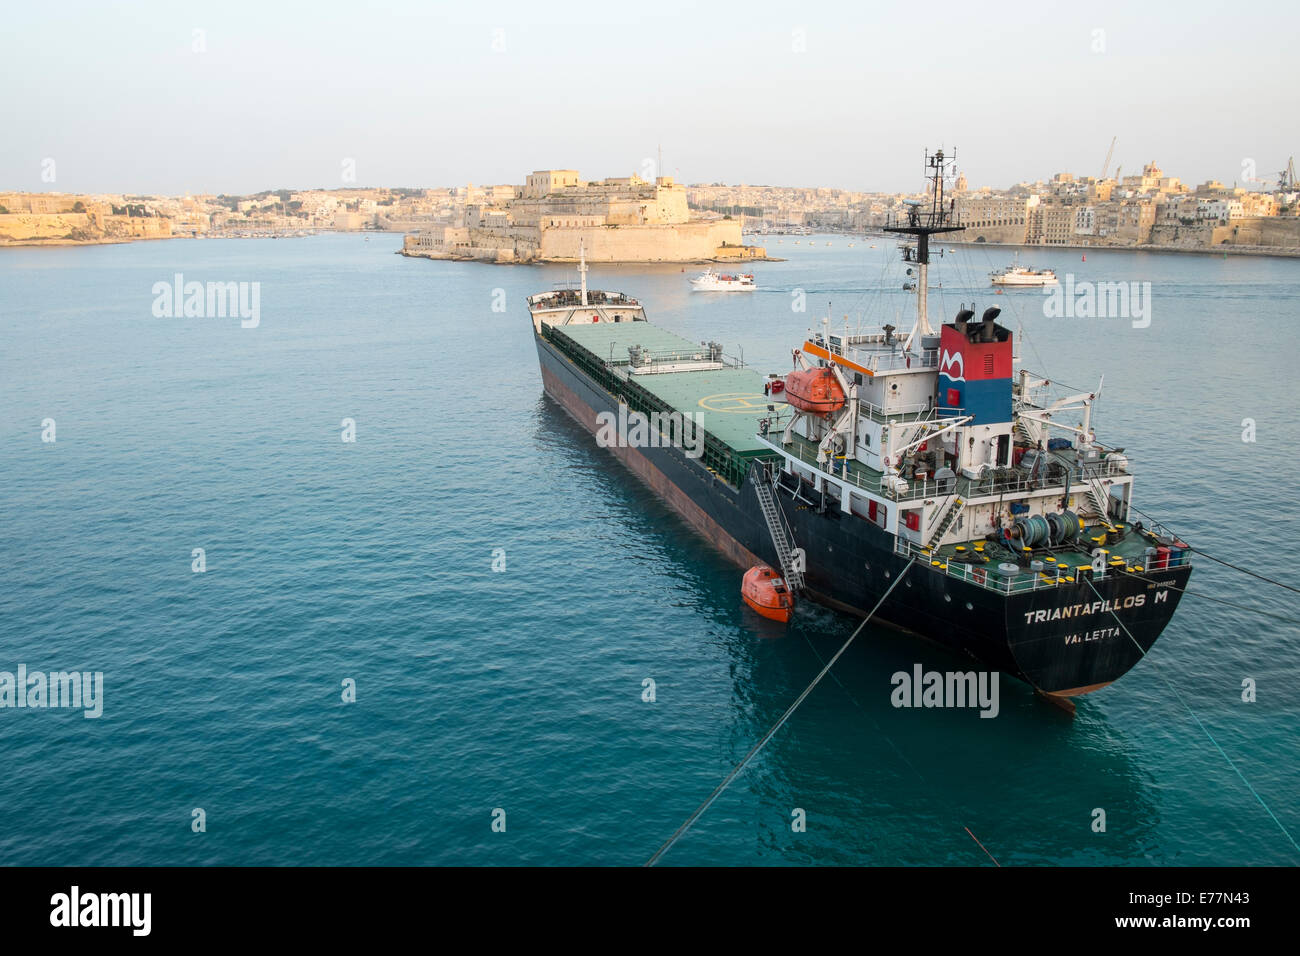 Oil tanker moored in the Grand Harbor in Valletta, Malta Stock Photo